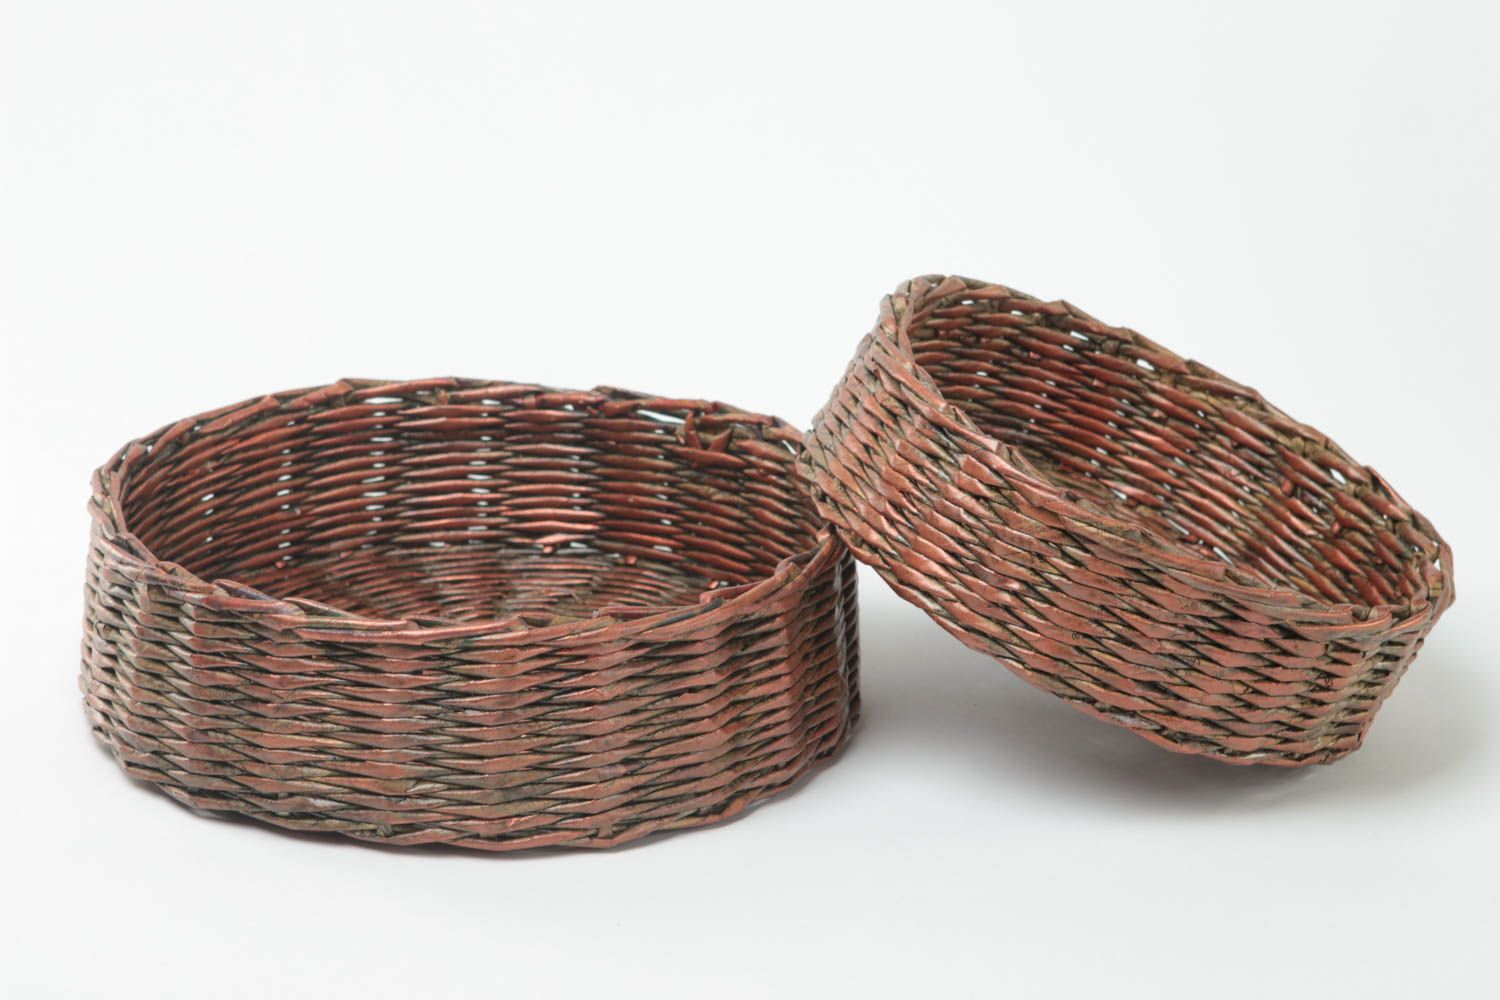 Handmade paper basket 2 newspaper baskets woven basket design gift ideas photo 2